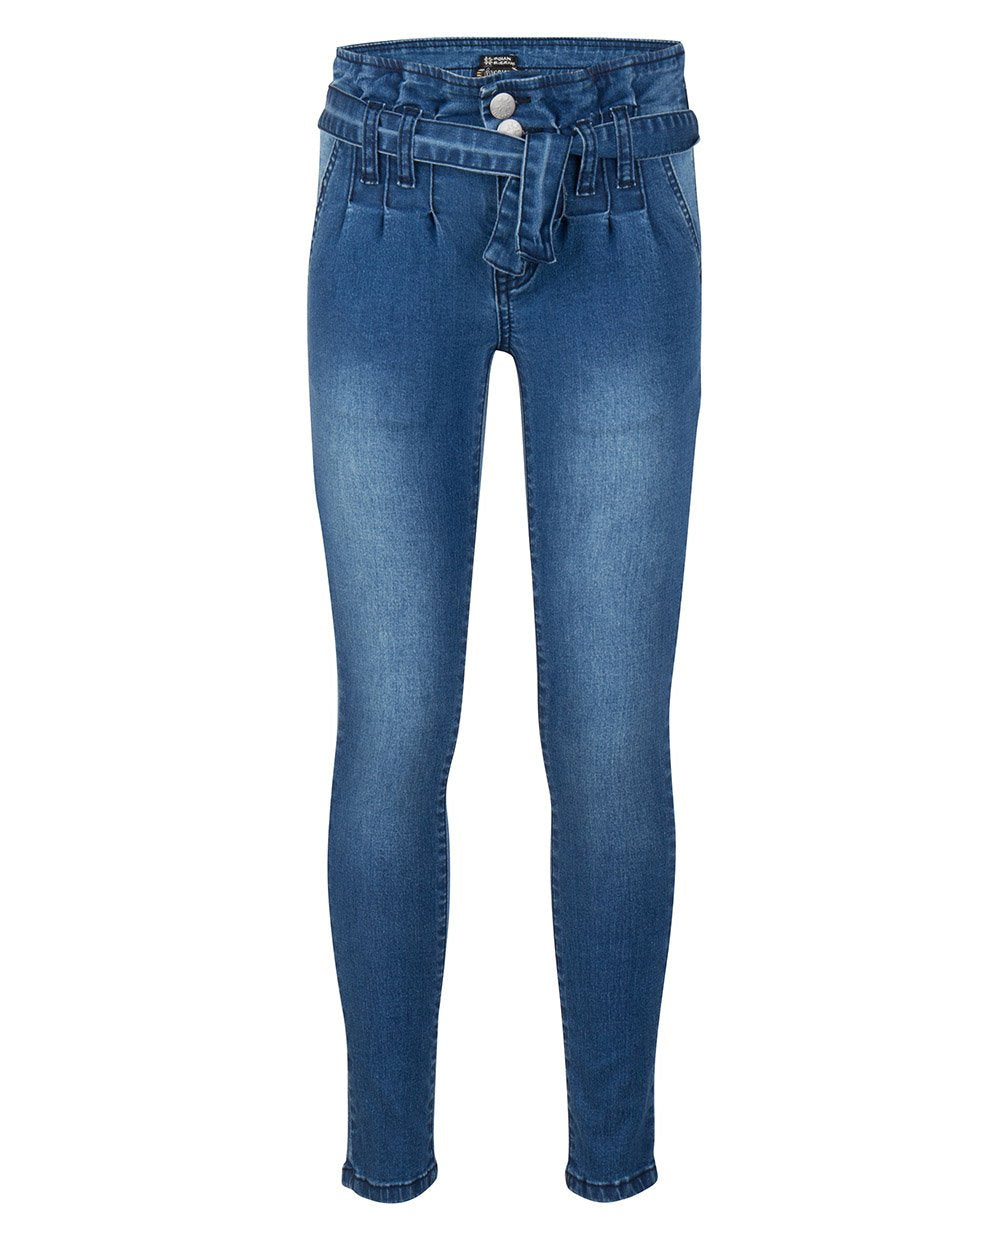 Meisjes BLUE LIV PAPERBAG FIT van Indian Blue Jeans in de kleur Medium Denim in maat 176.